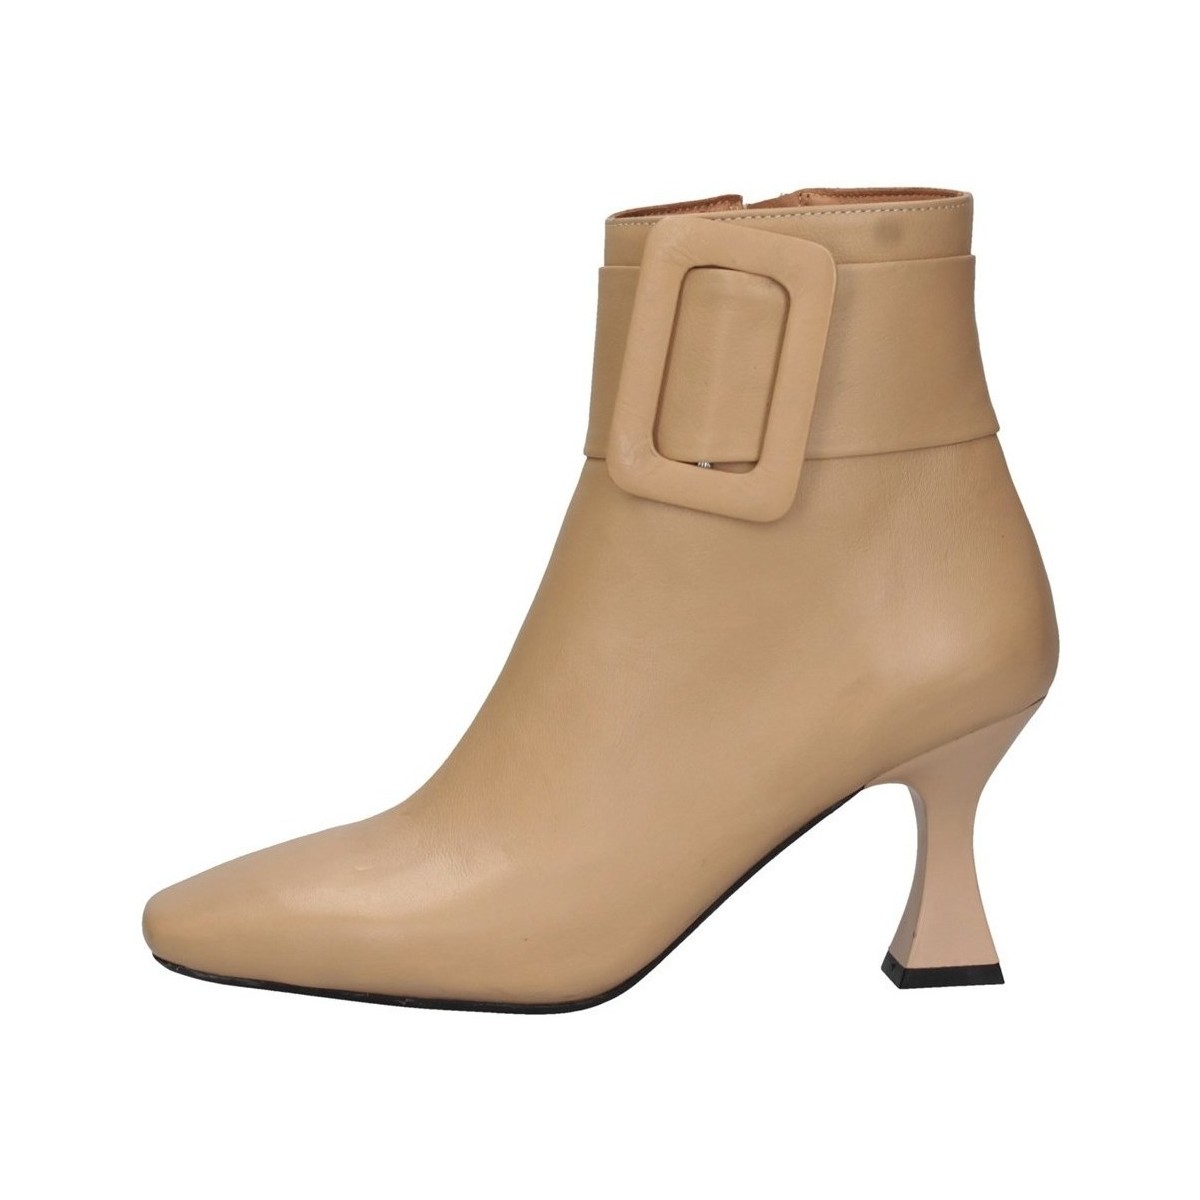 Chaussures Femme Low boots Hersuade W2251 Bottes et bottines Femme BEIGE Beige